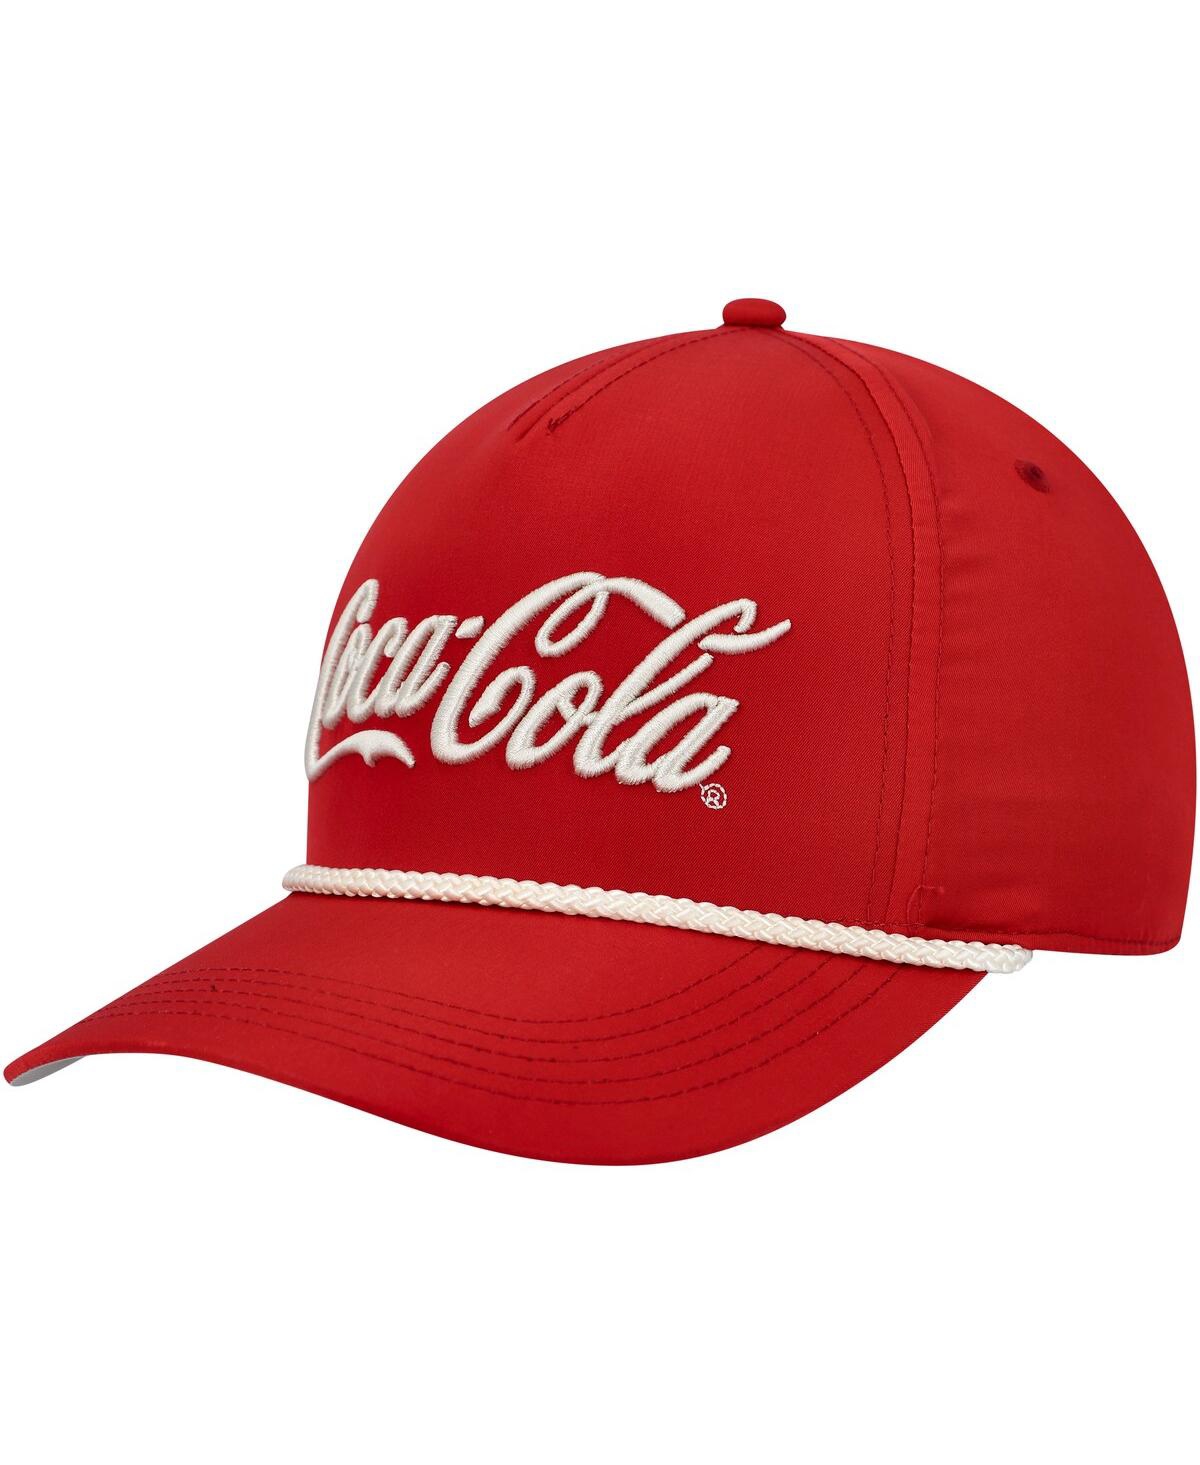 Men's American Needle Red Coca-Cola Traveler Snapback Hat - Red